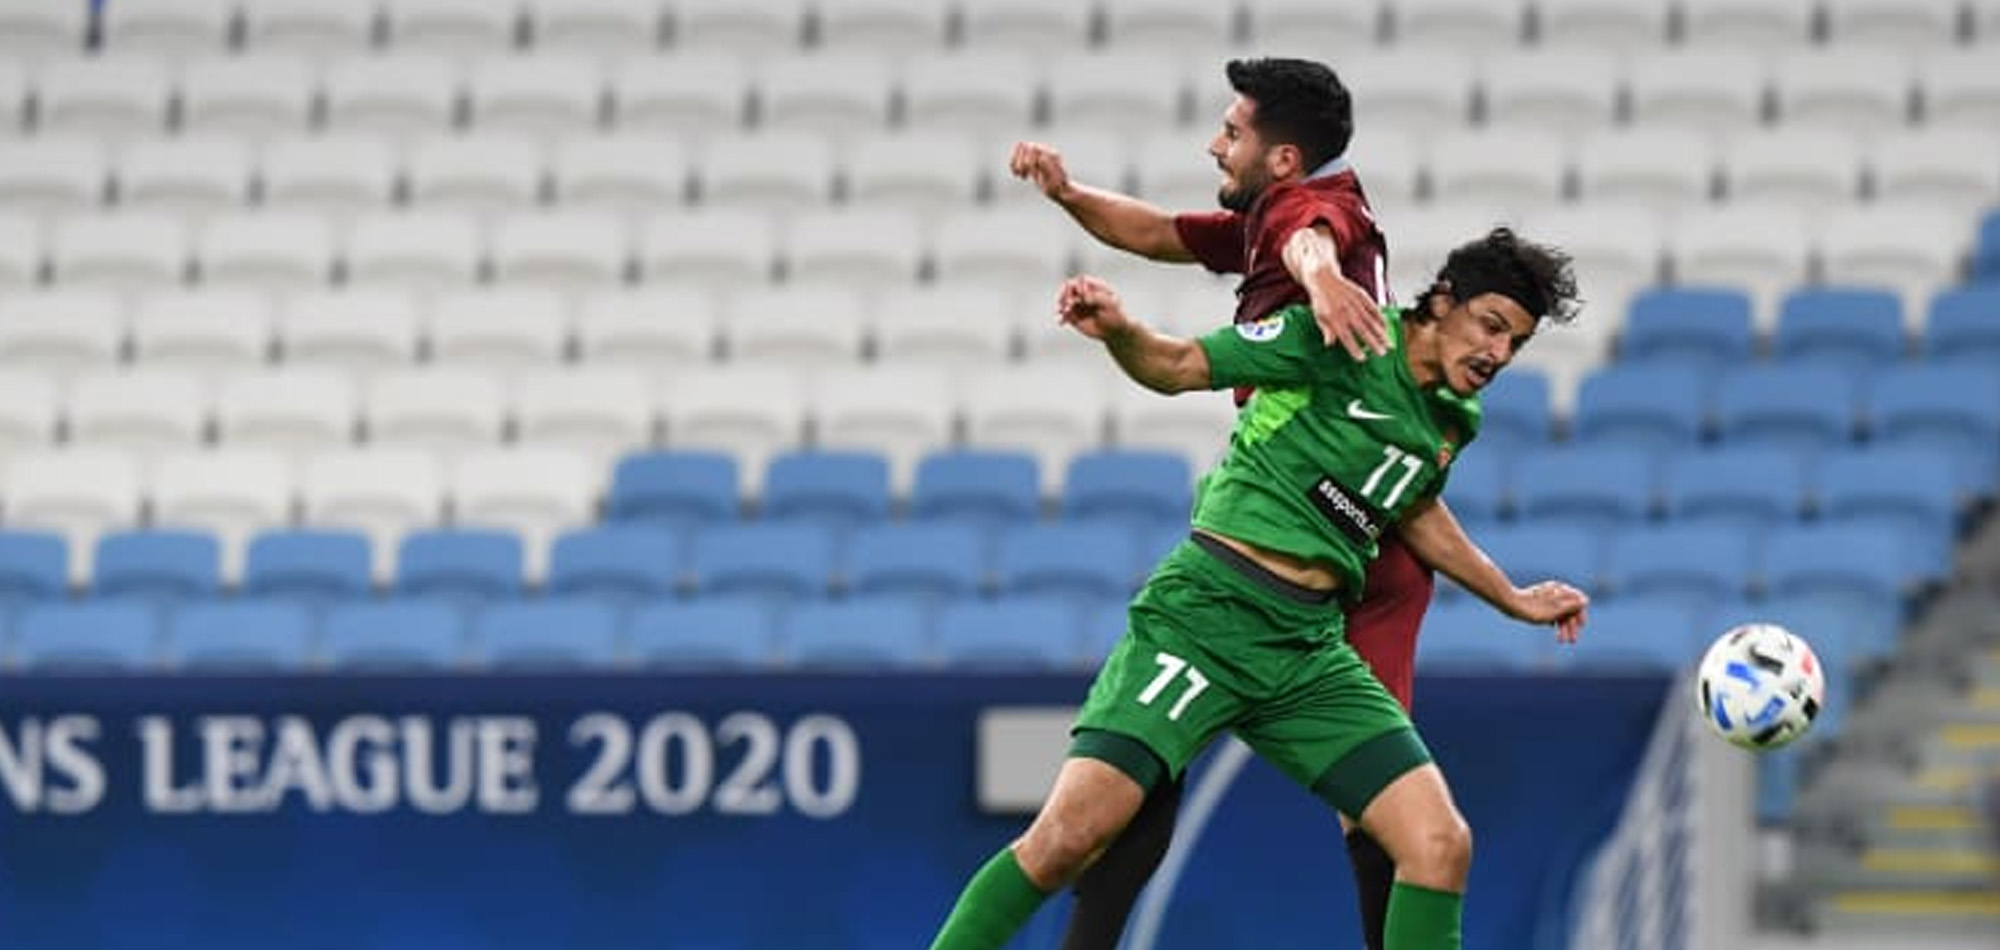 ACL2020 - Group B: Shabab Al Ahli Dubai keep hopes alive with win over Shahr Khodro